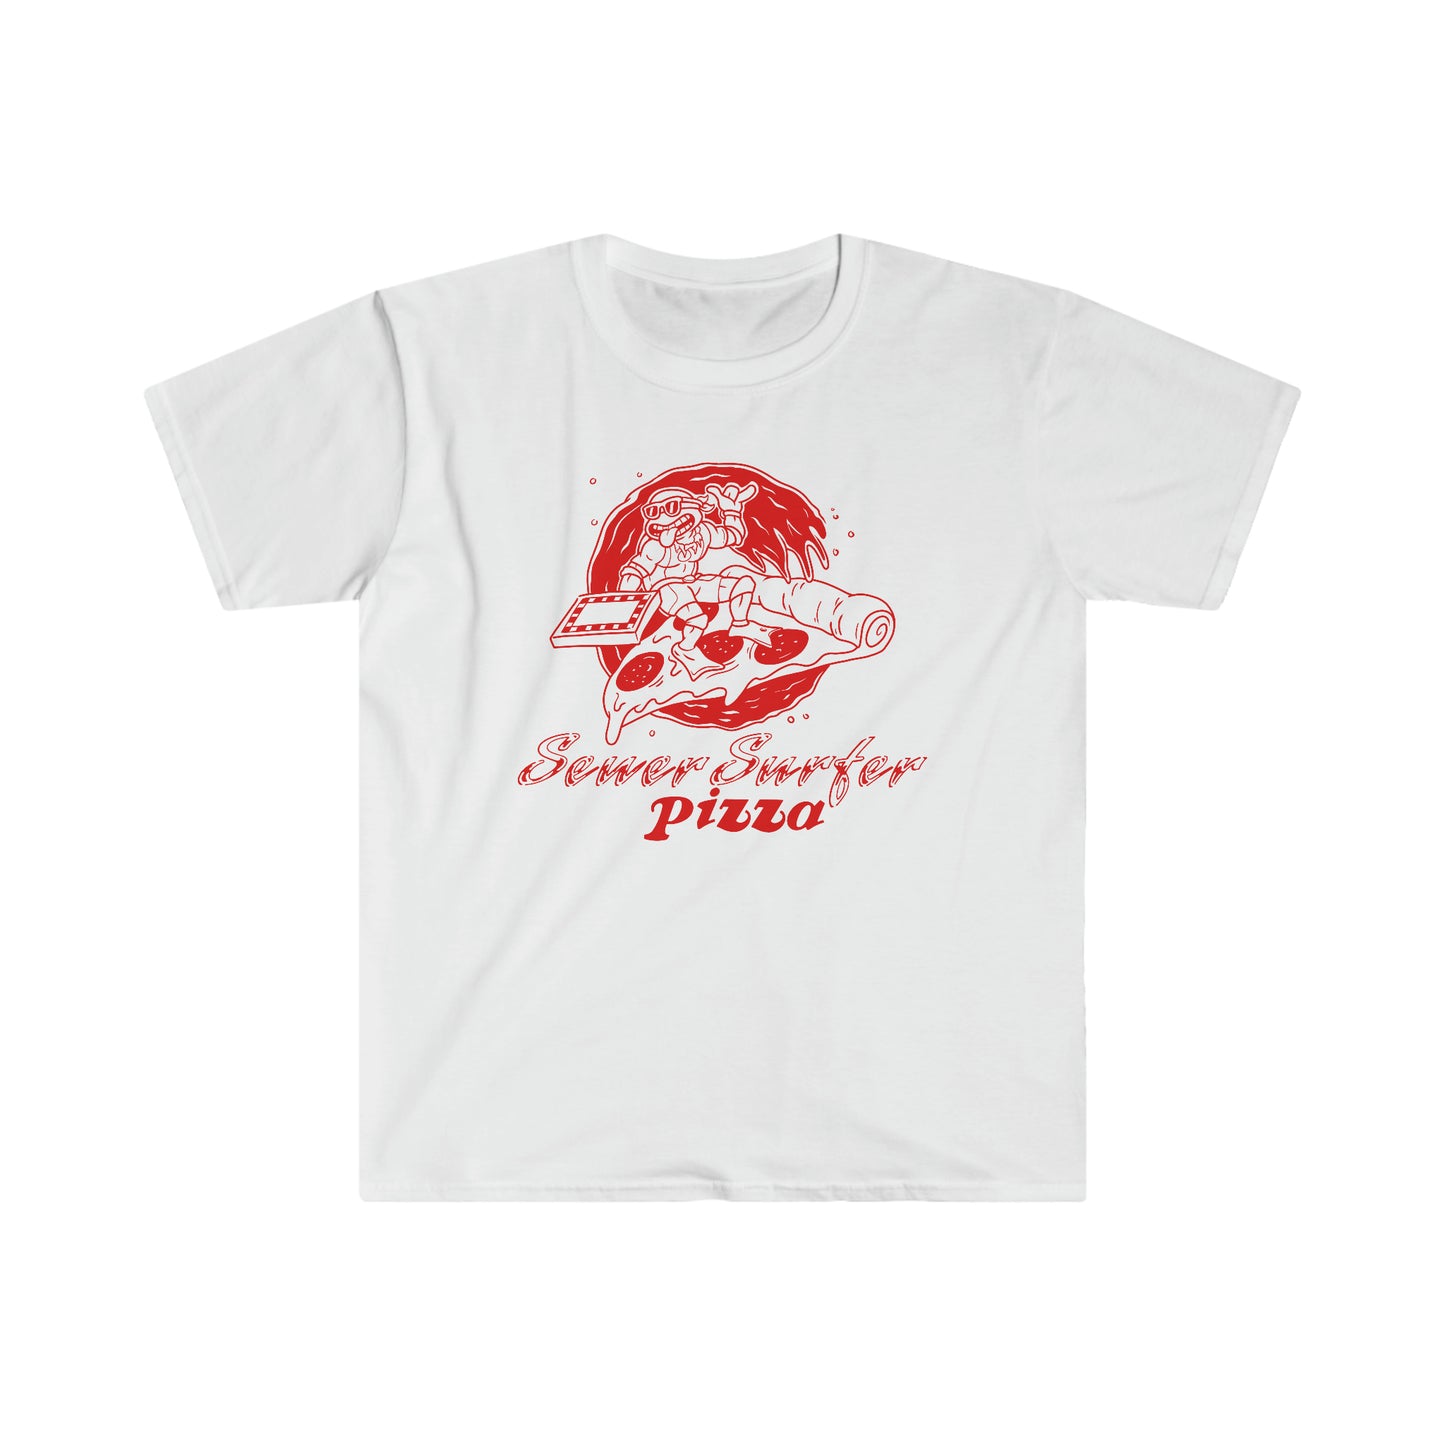 Sewer Surfer Pizza t-shirt